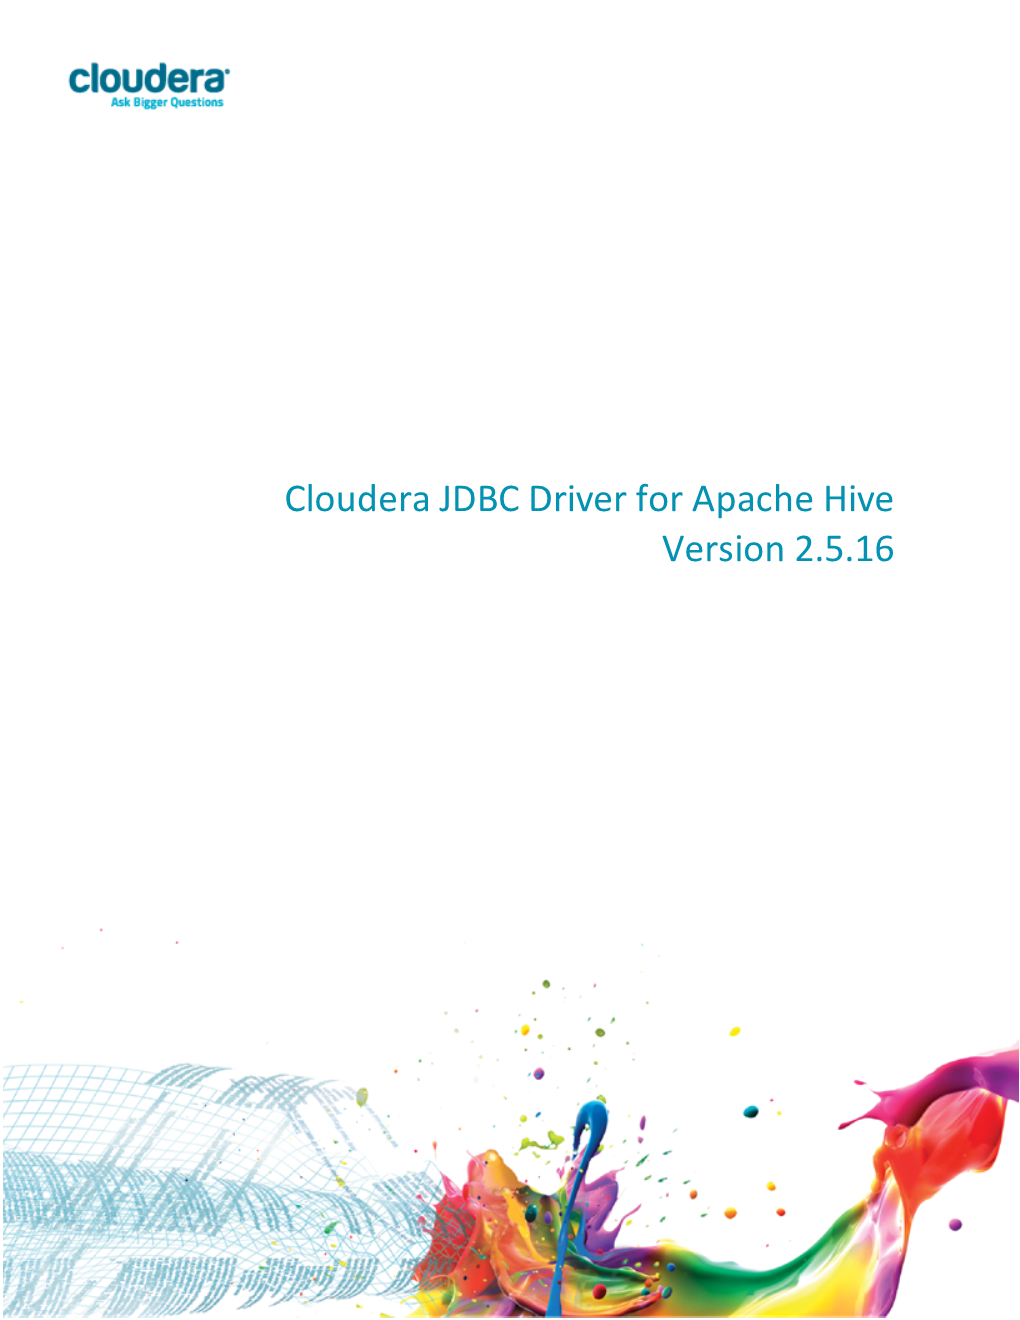 Cloudera JDBC Driver for Apache Hive Version 2.5.16 Important Notice